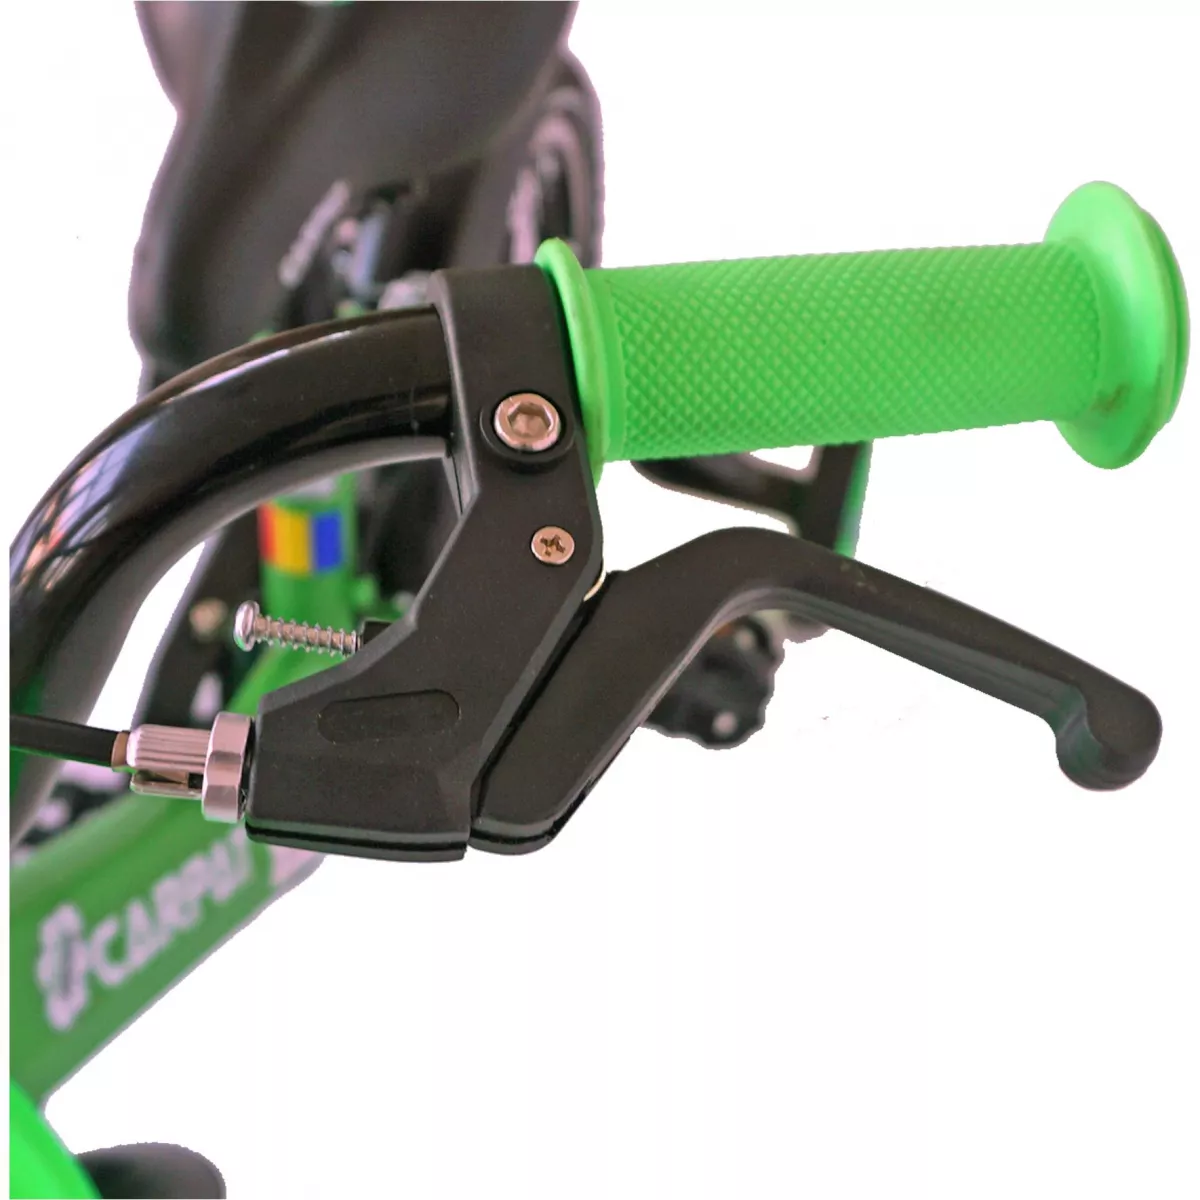 Bicicleta baieti CARPAT C1201C, roata 12", V-Brake, roti ajutatoare, 2-4 ani, verde/negru 